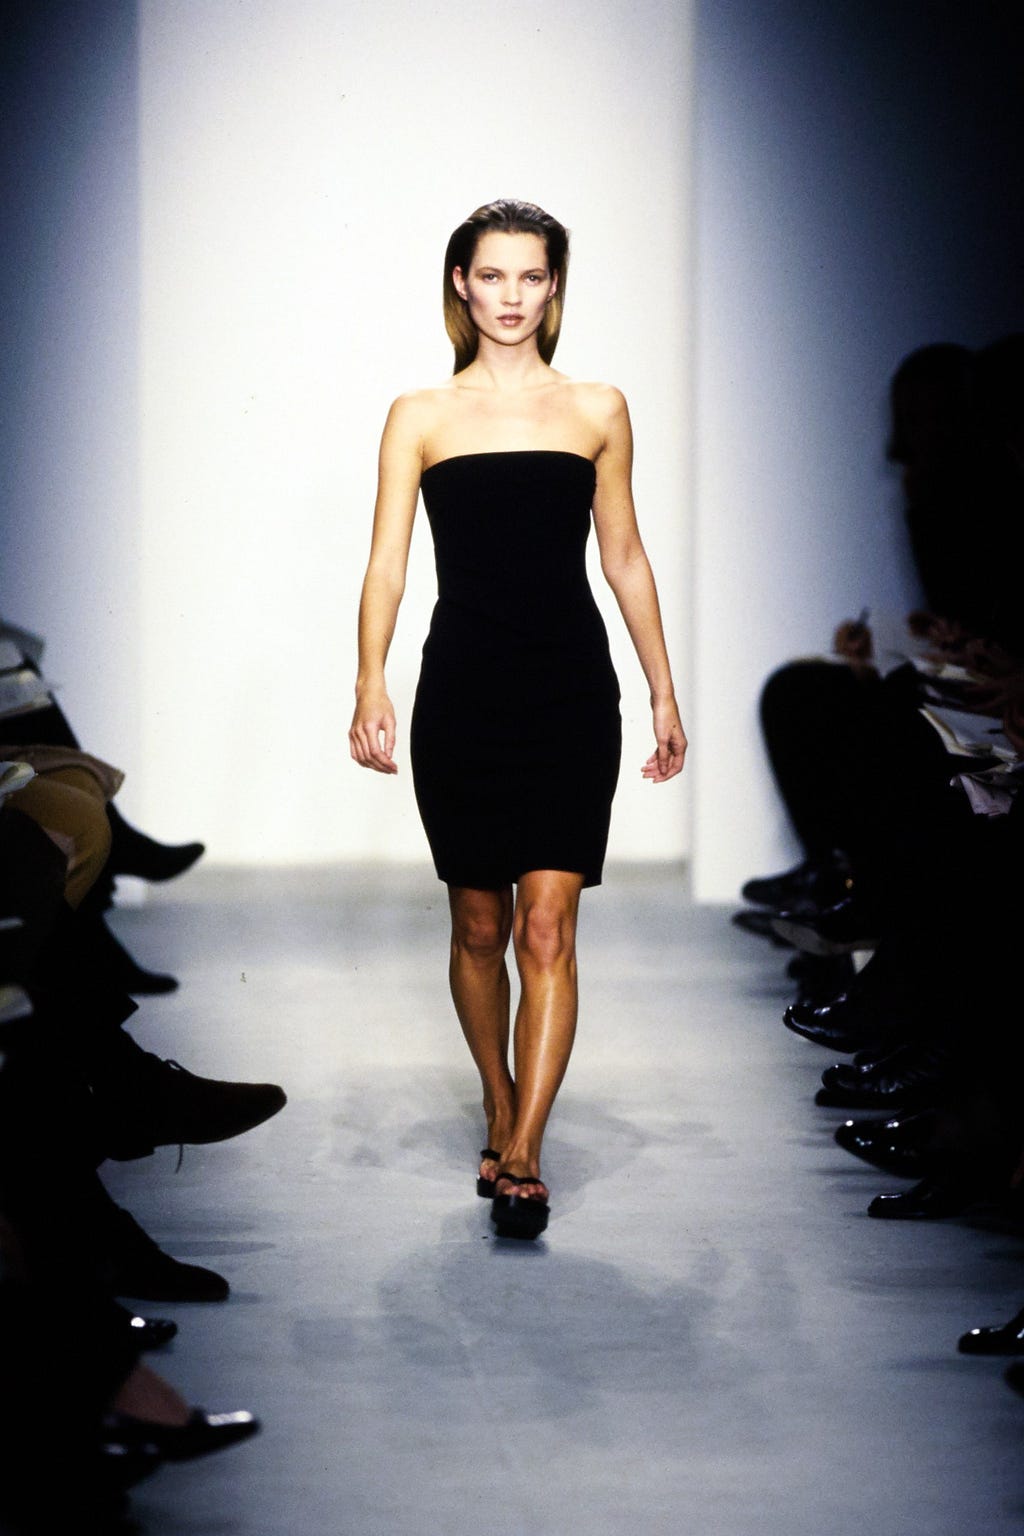 Kate Moss modeling a black tube dress on the runway.